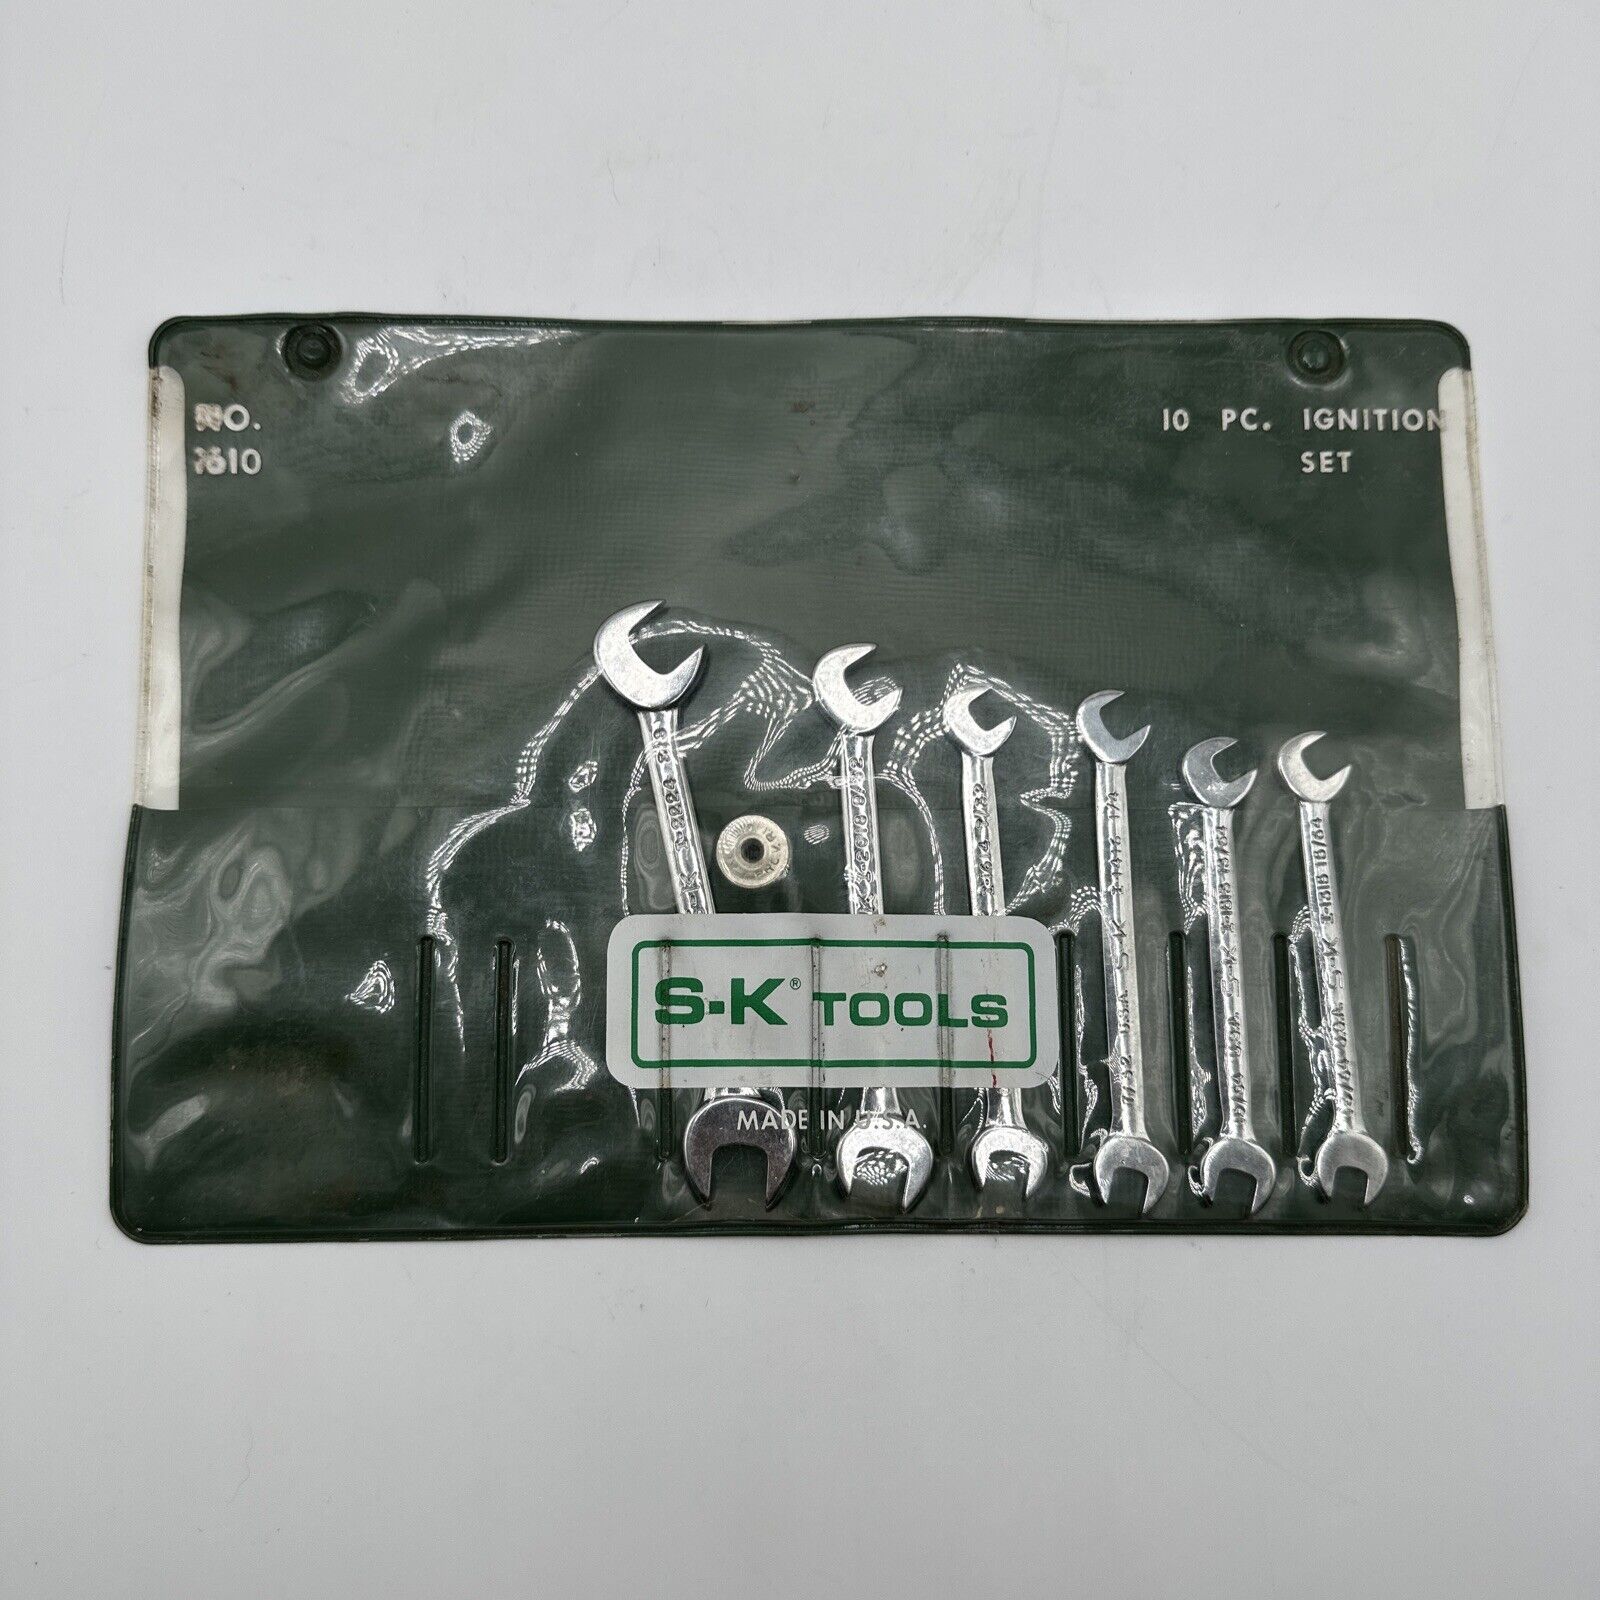 Vintage S-K Tools No.1610 10 Pc. Ignition Set INCOMPLETE